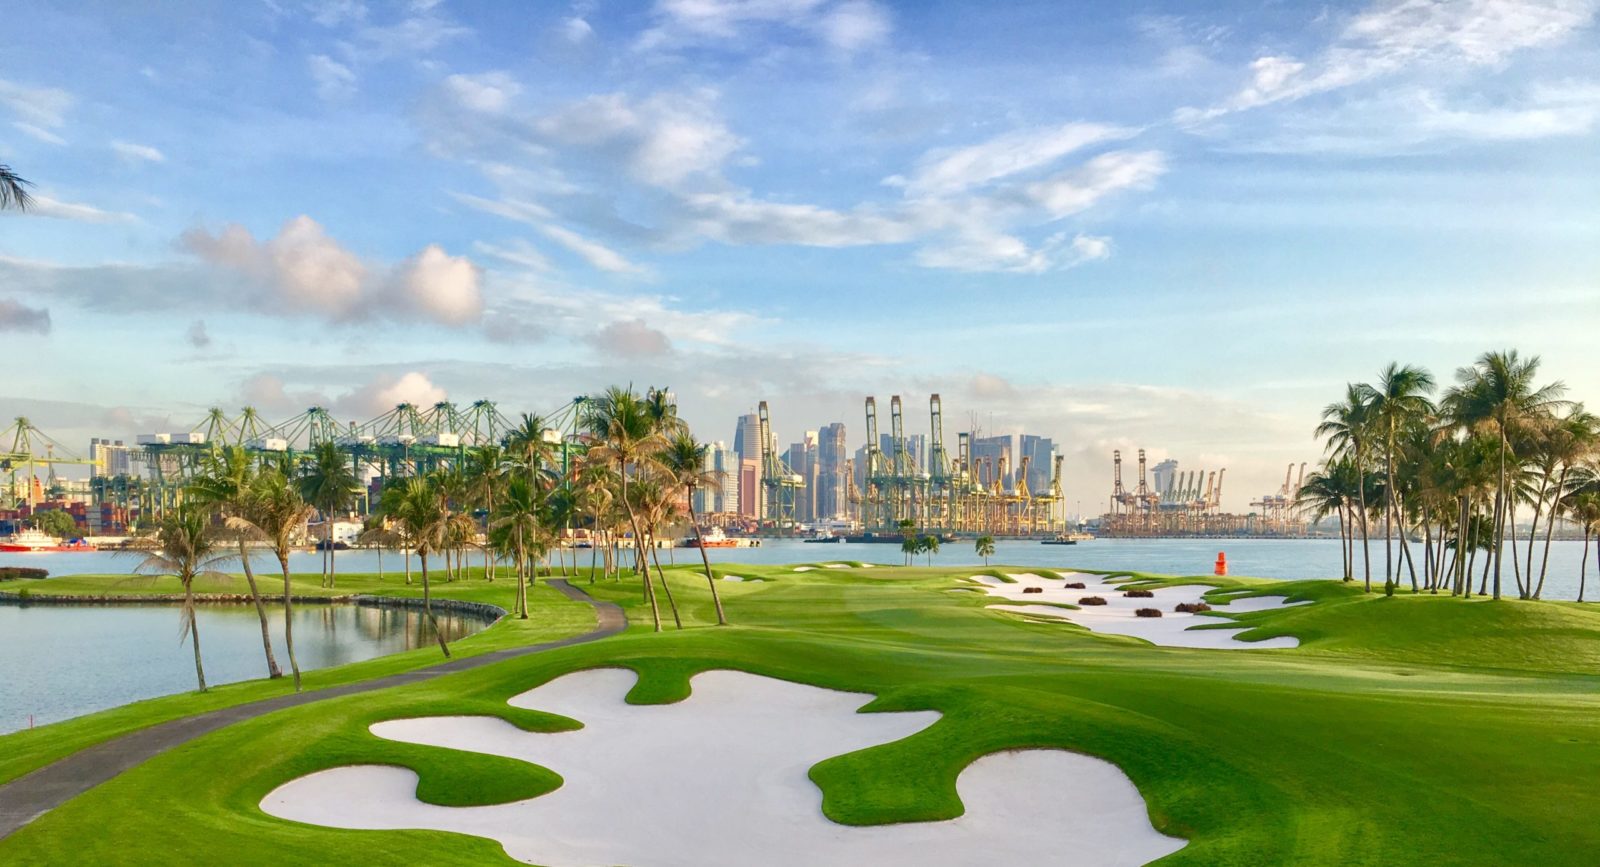 Sentosa Golf Club named ‘World’s Best Eco-Friendly Golf Facility’ at the World Golf Awards